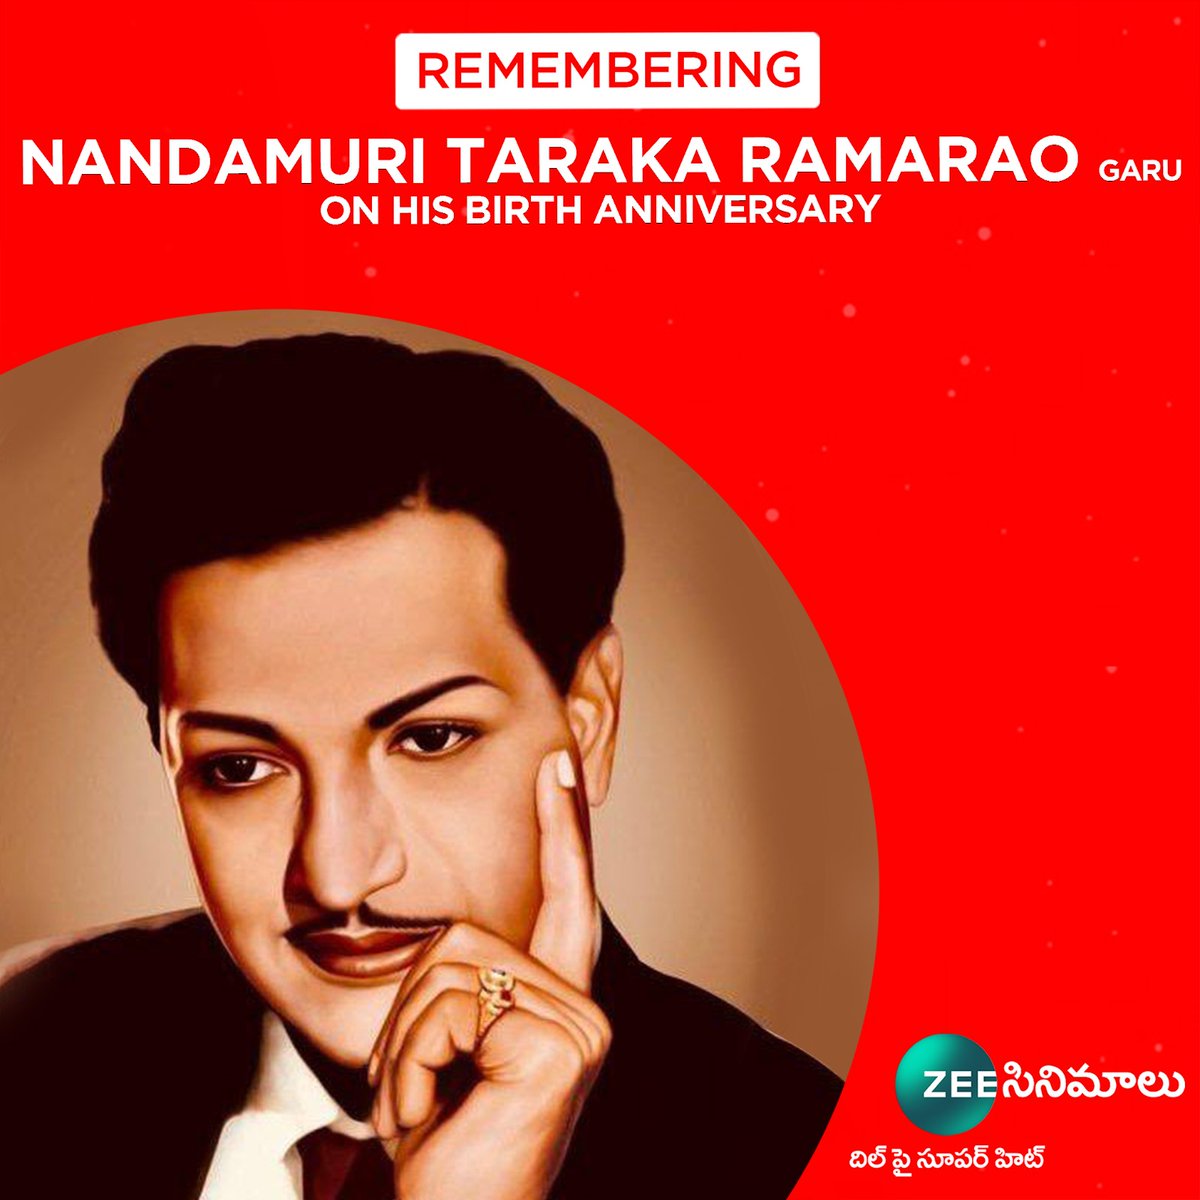 Remembering the legendary actor and pride of Telugu Cinema 'Viswa Vikyatha Nata Sarvabhouma' #NandamuriTarakaRamaRao garu on his Centenary Birth Anniversary!! 🙏🙏

#RememberingNTR #100YearsOfNtr #SrNTR #NTRCentenary #ZeeCinemalu